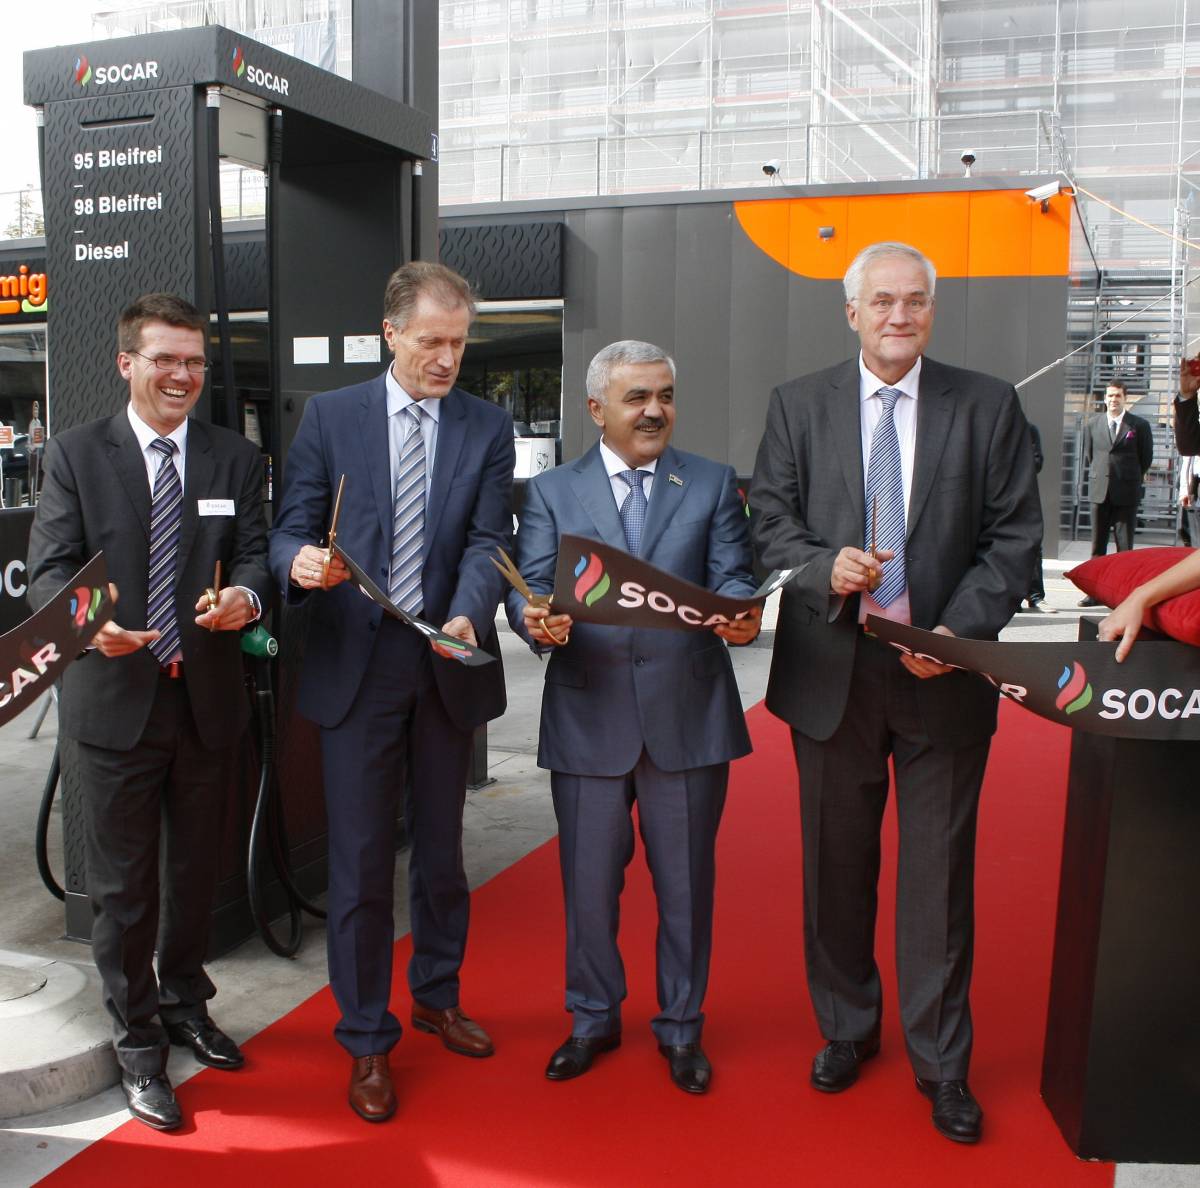 SOCAR eröffnet erste Tankstelle